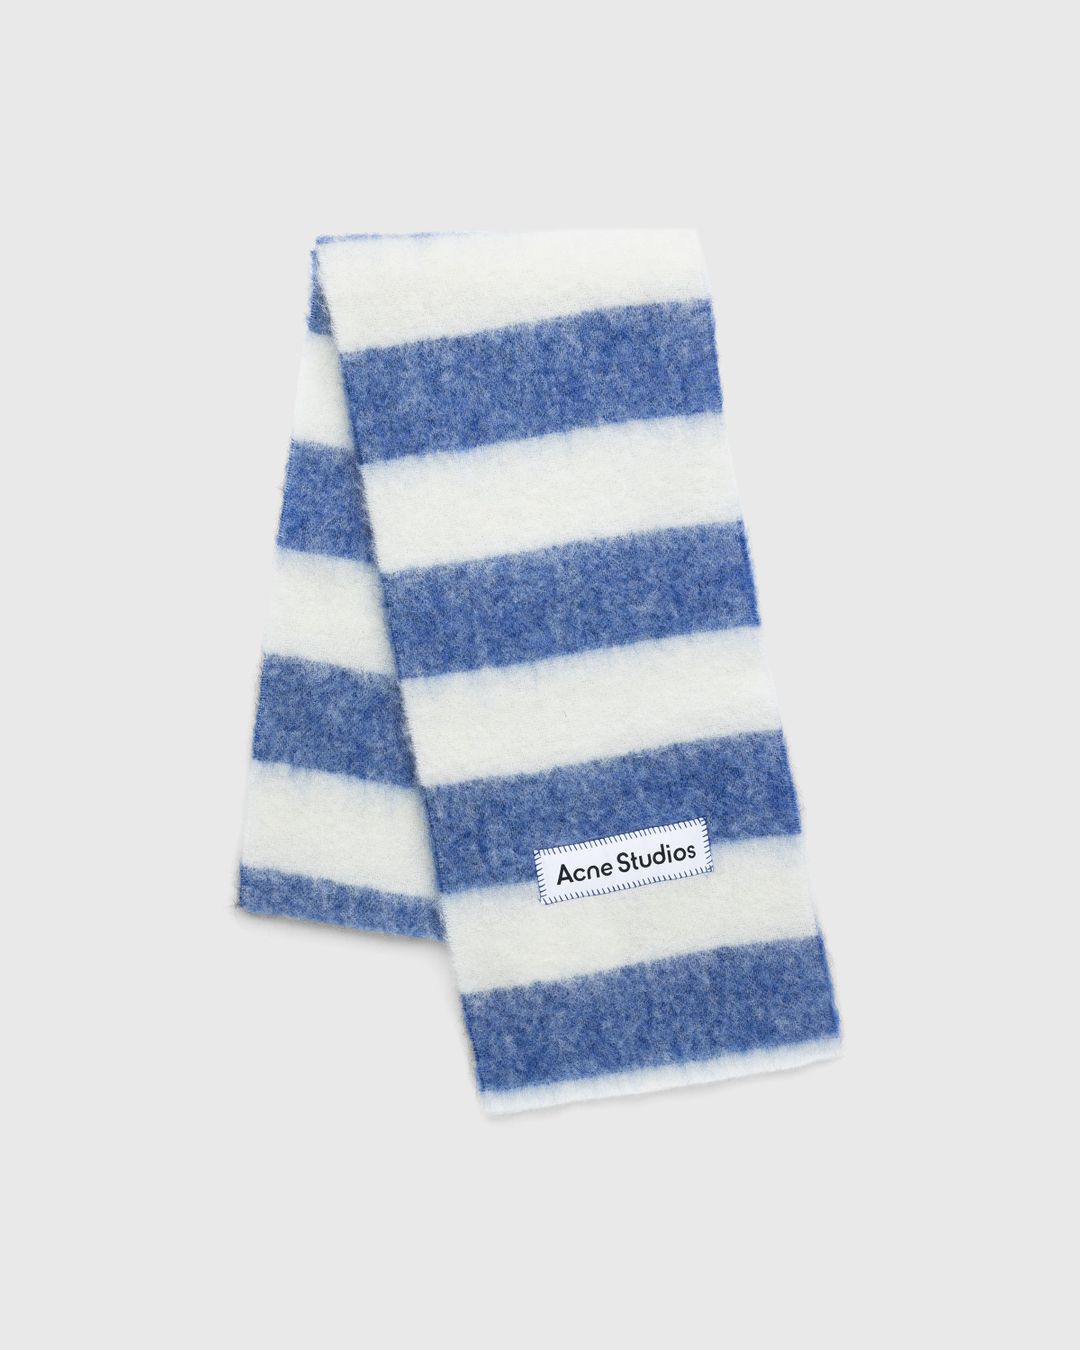 Acne Studios – Striped Wool Blend Scarf Blue/White | Highsnobiety Shop